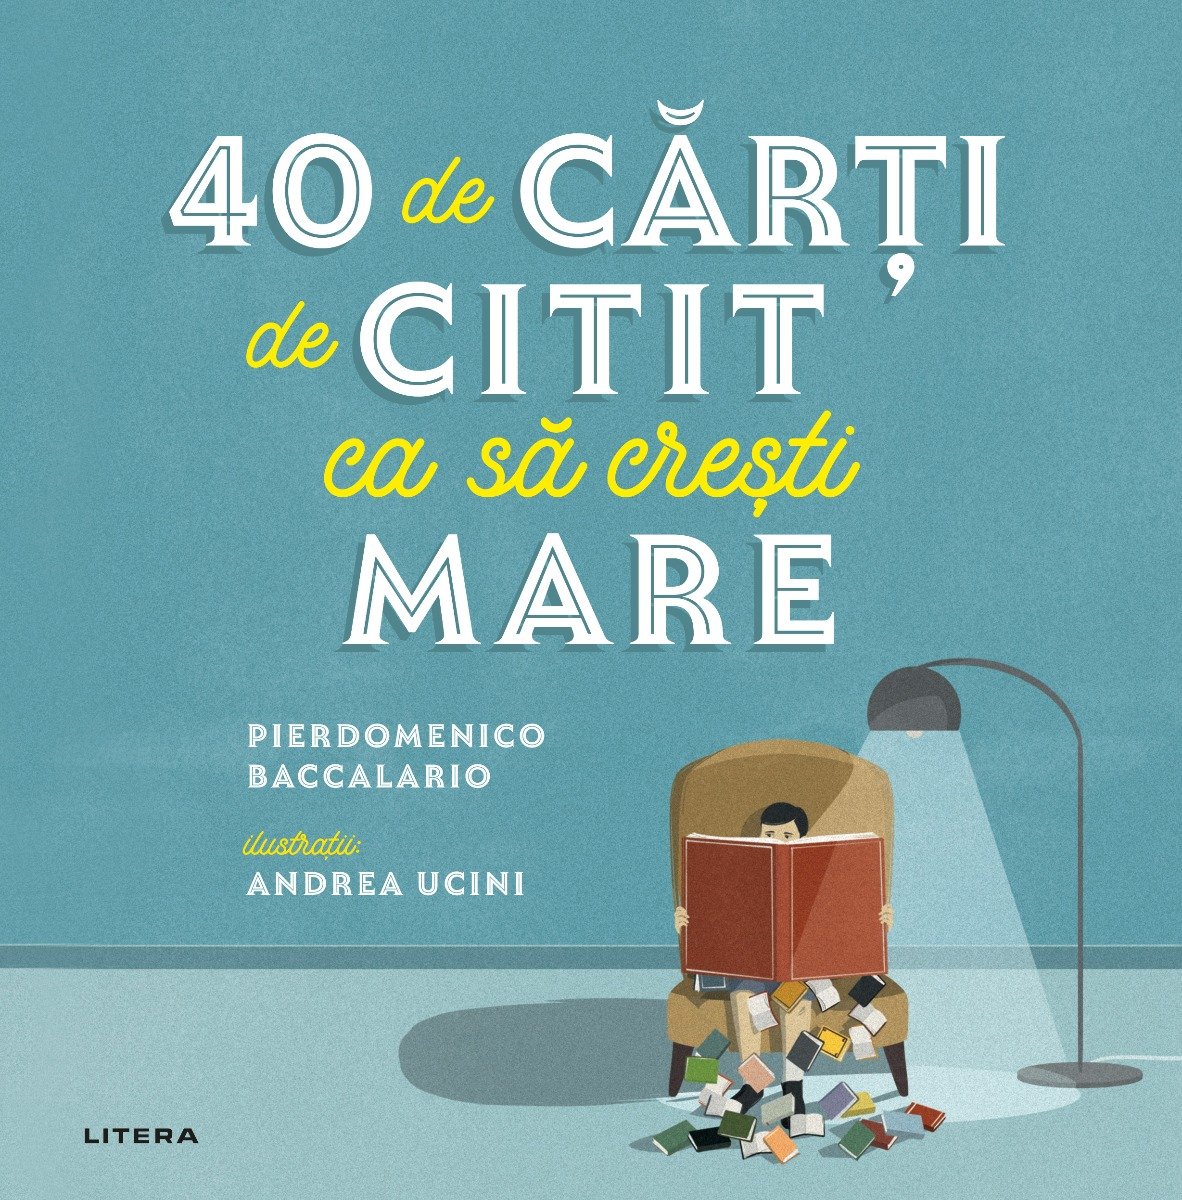 40 de carti de citit ca sa cresti mare, Pierdomenico Baccalario Carti pentru copii 2023-09-26